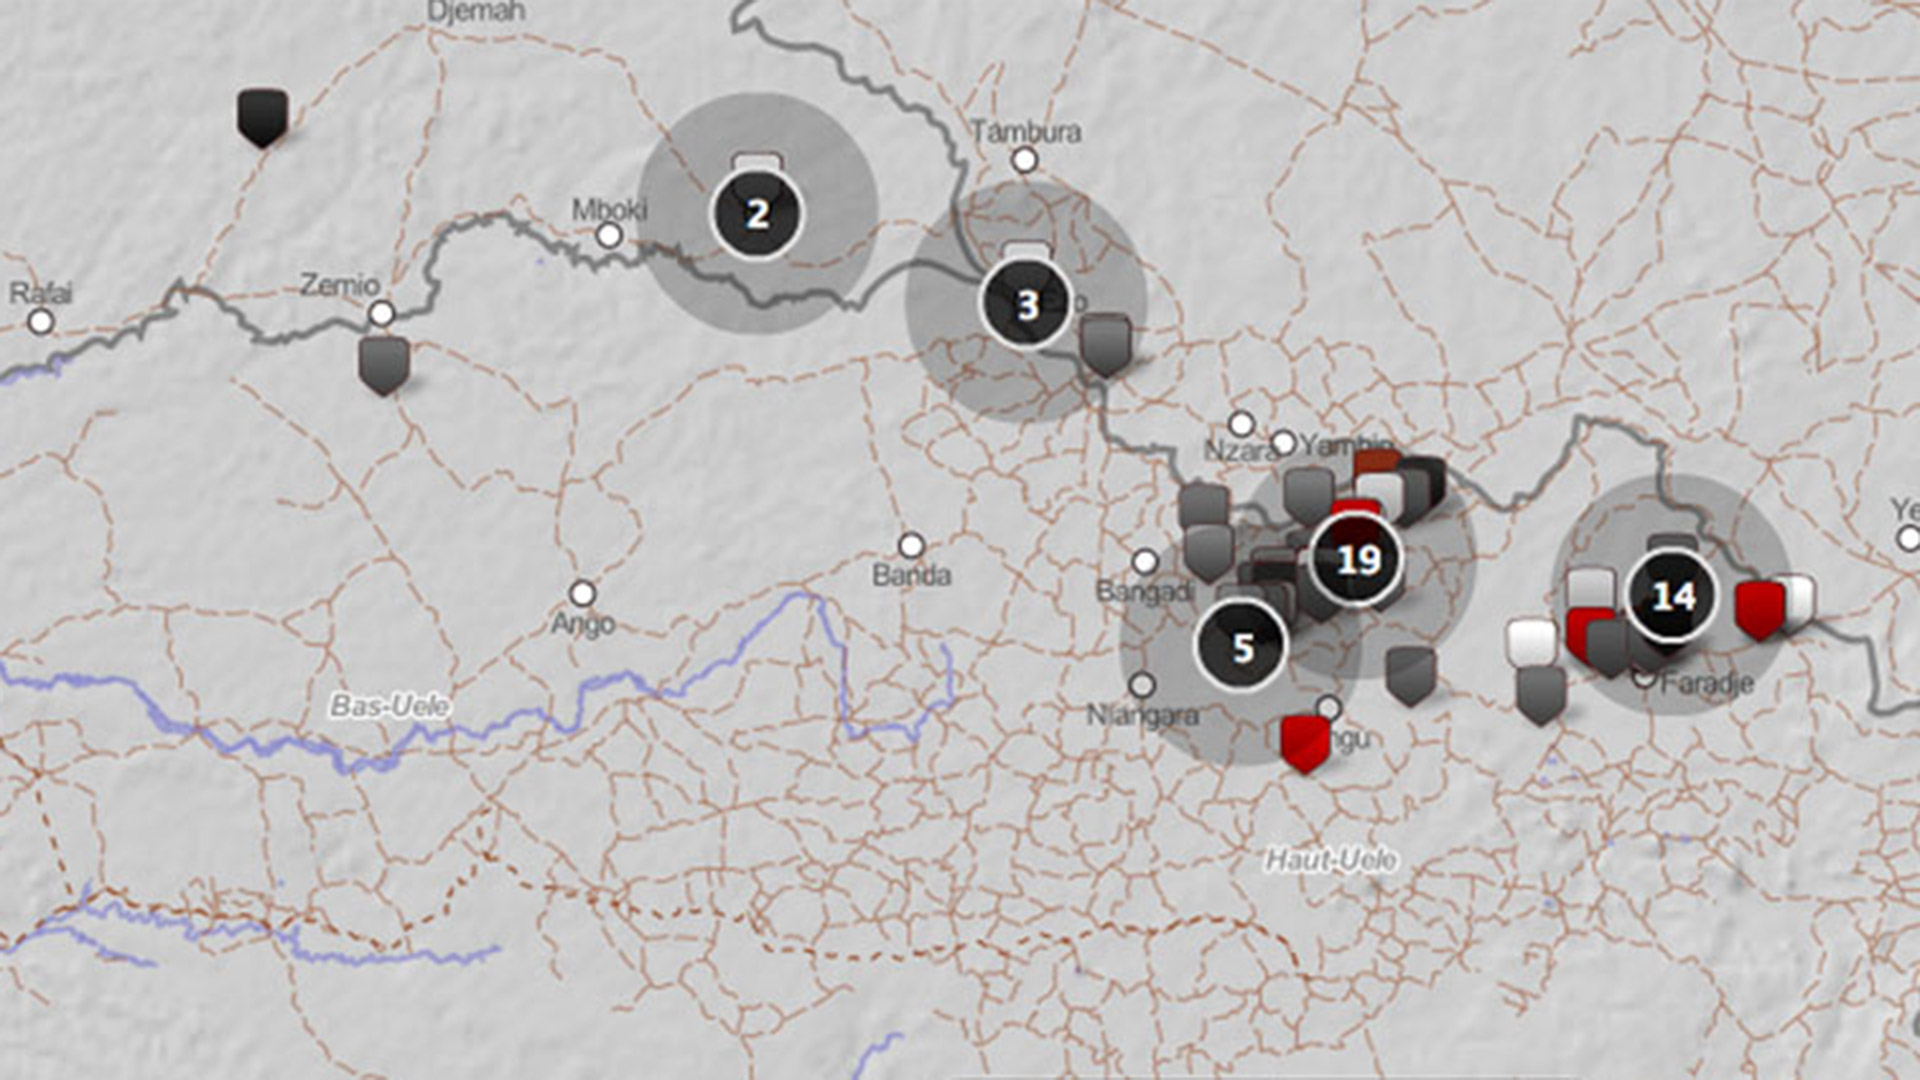 LRA Crisis Tracker